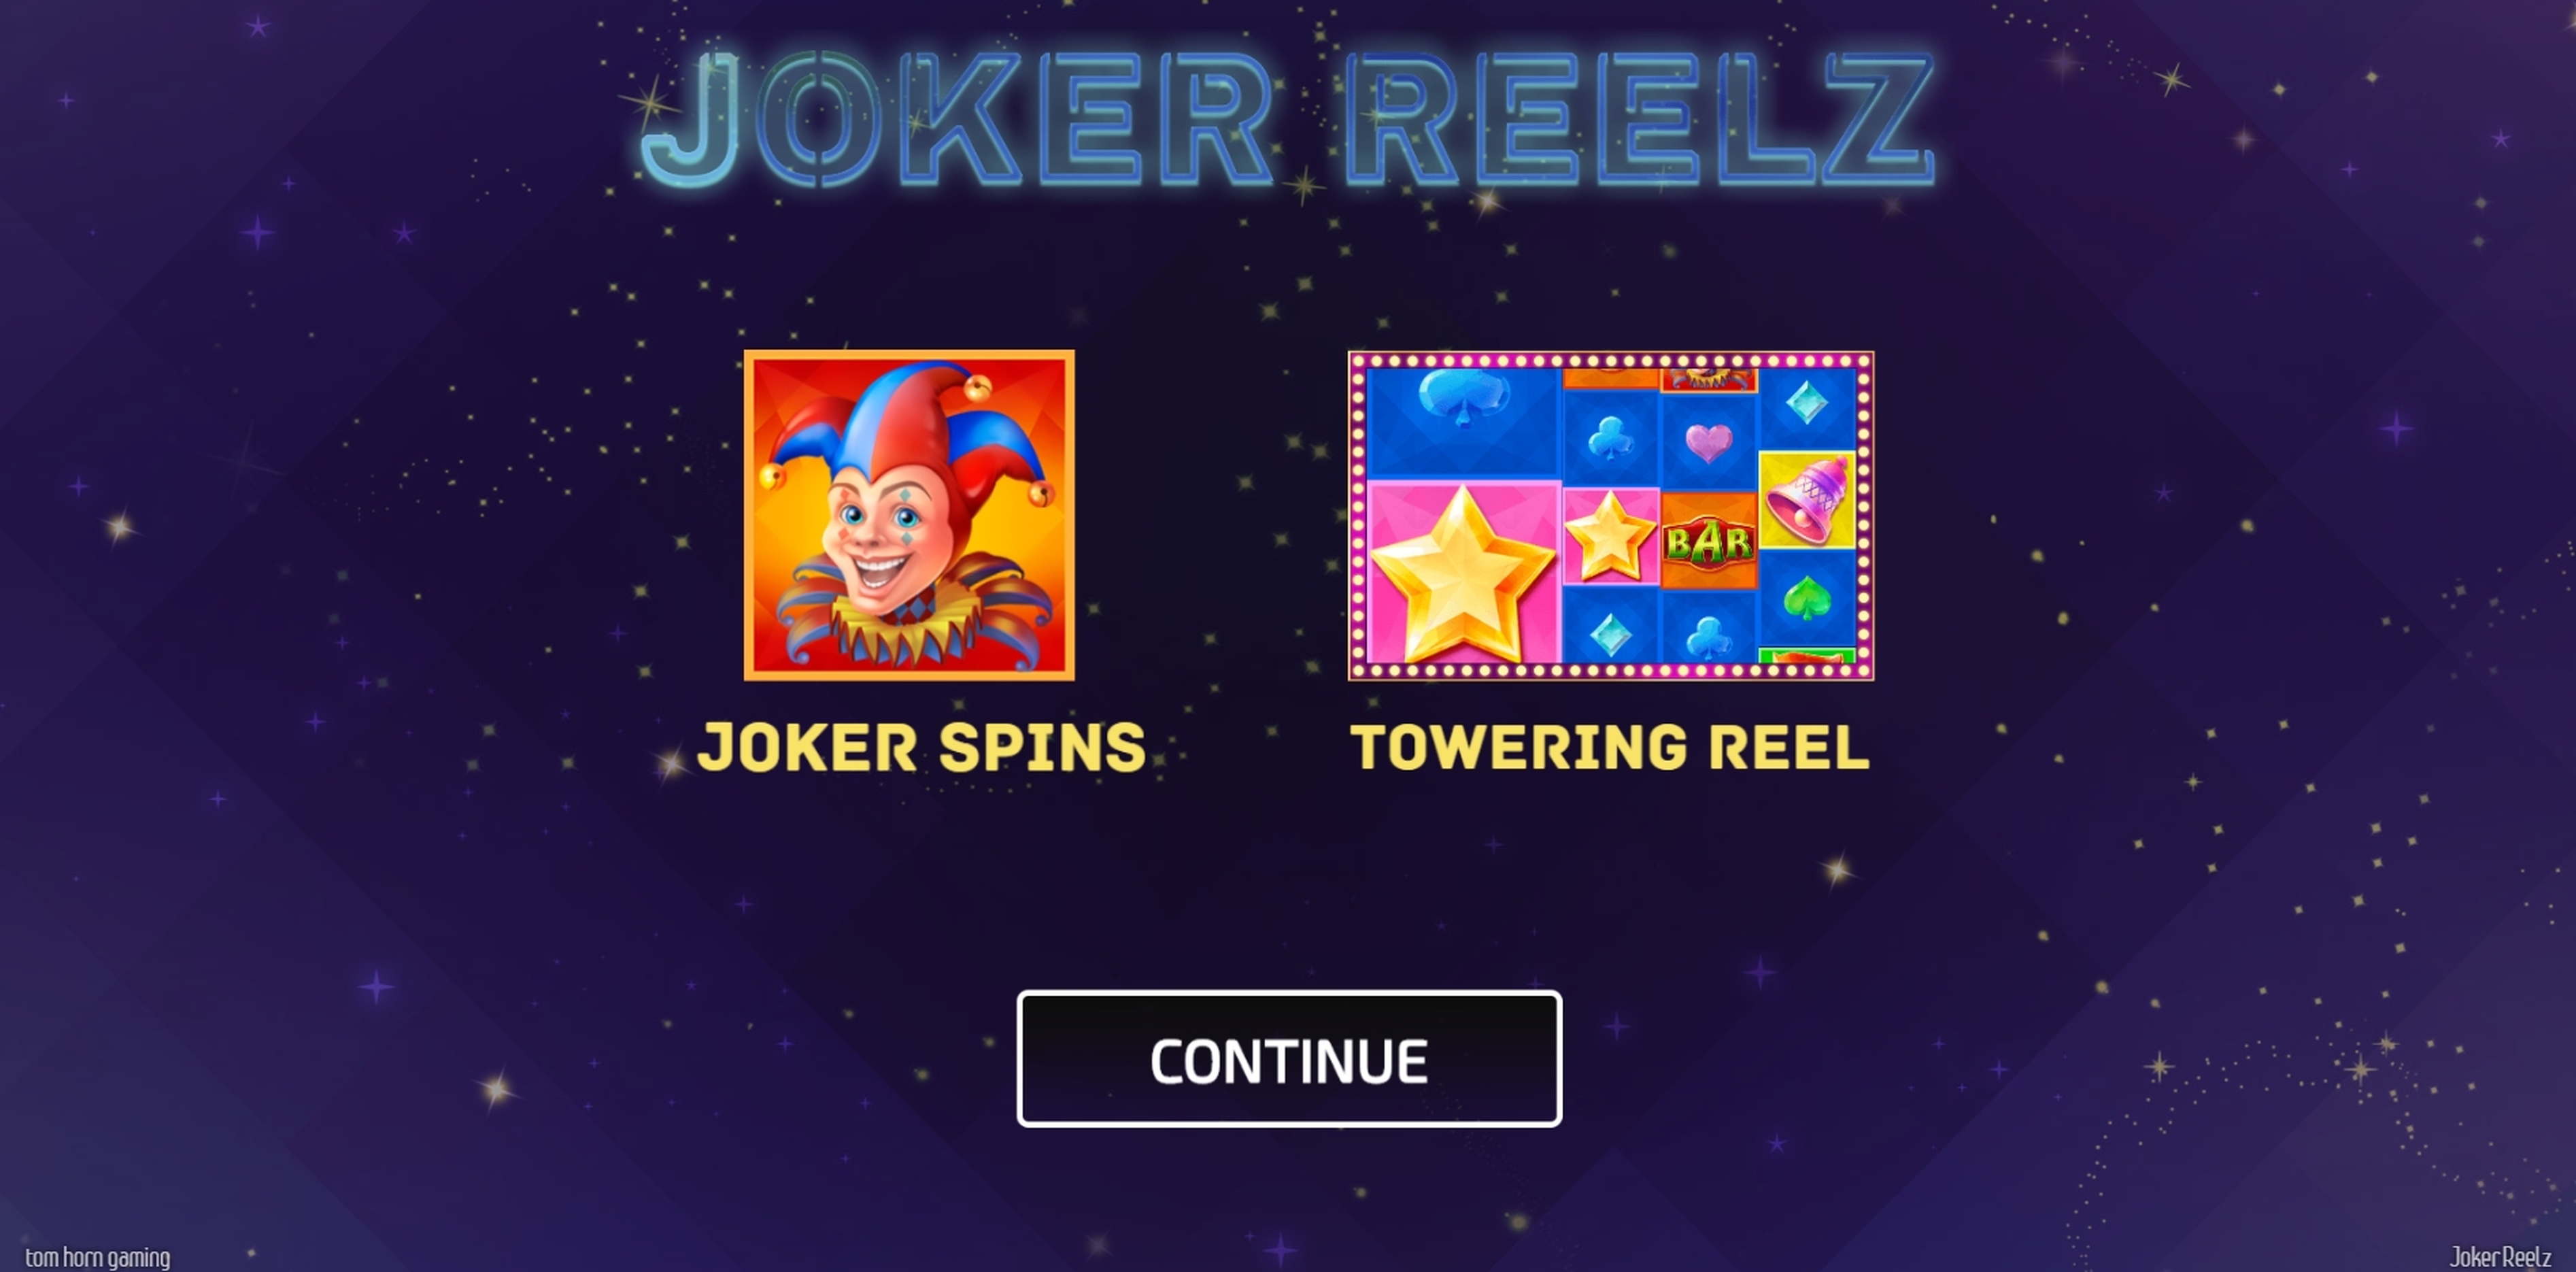 Play Joker Reelz Free Casino Slot Game by Tom Horn Gaming